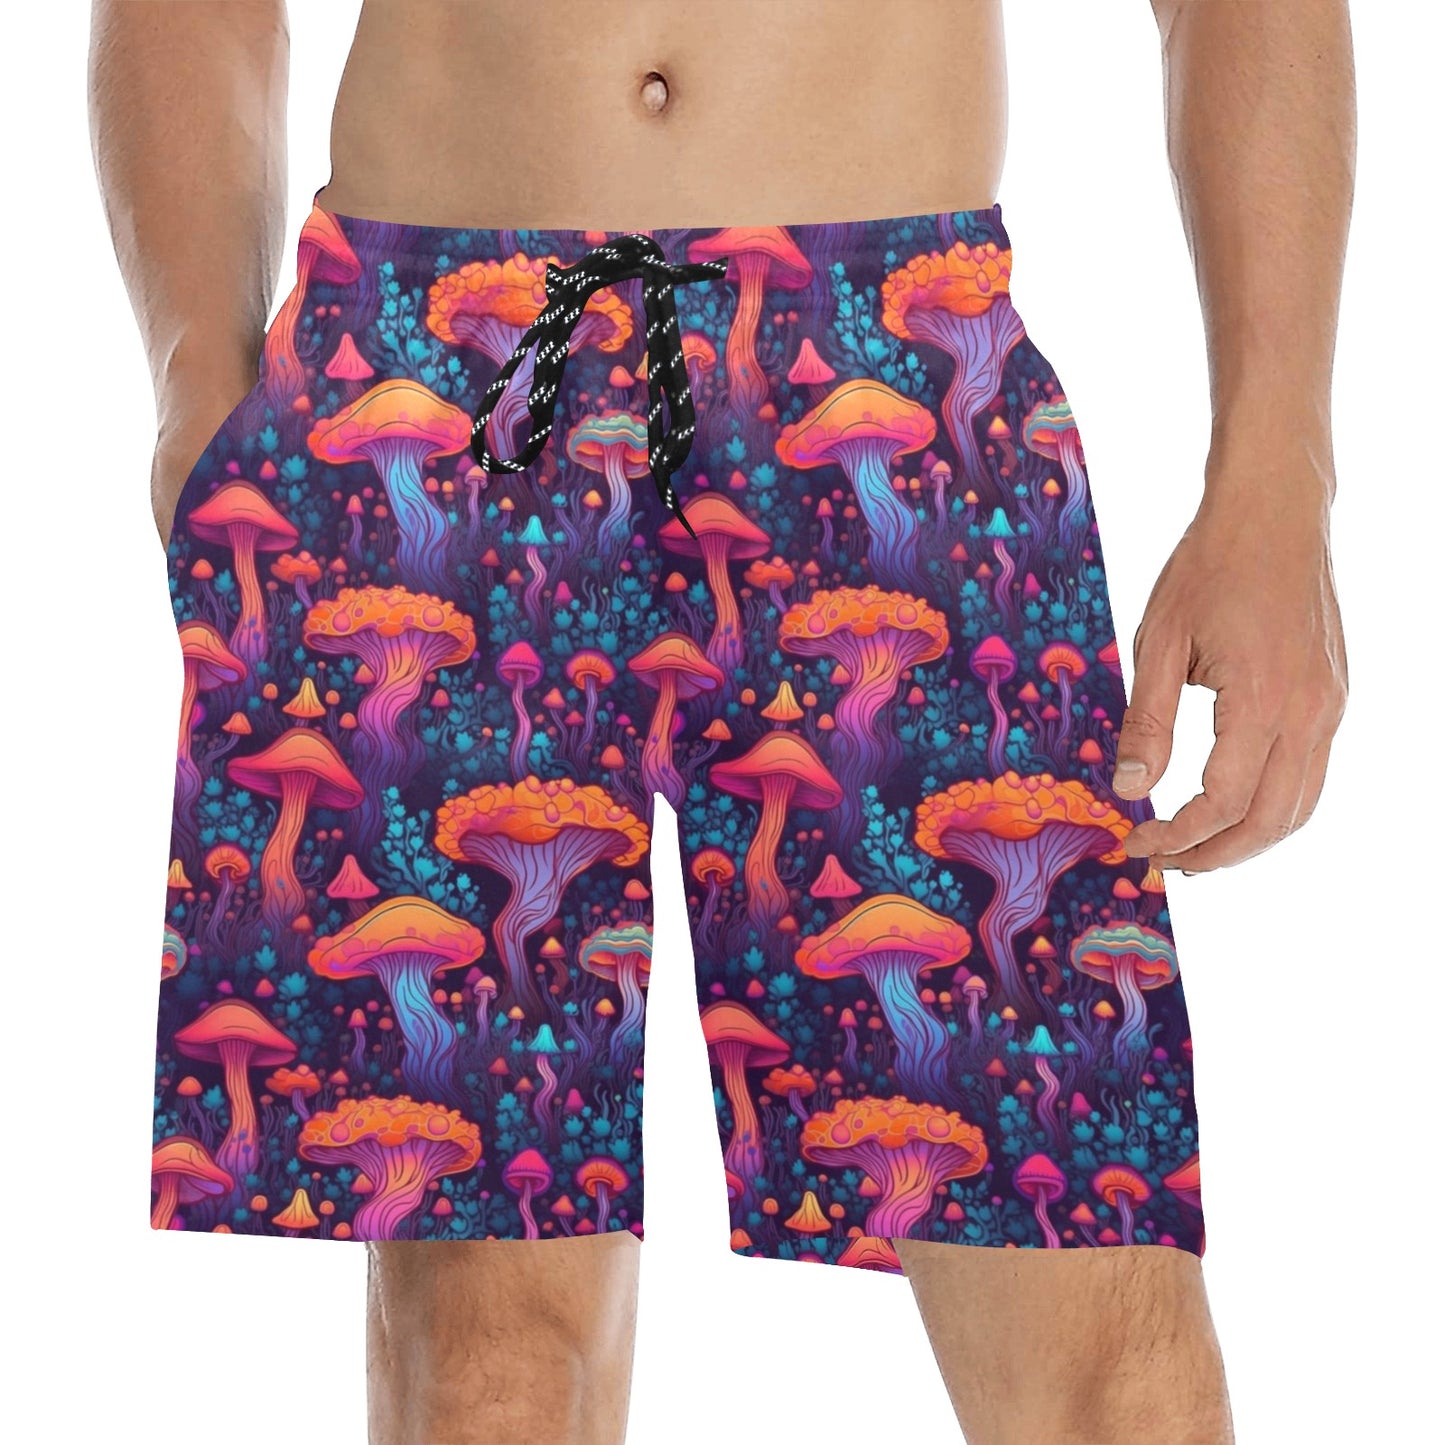 Mushroom Men Swim Trunks, Psychedelic Trippy 7 Inch Shorts Beach Surf Swimwear Front Back Pockets Mesh Lining Drawstring Bathing Suit Starcove Fashion